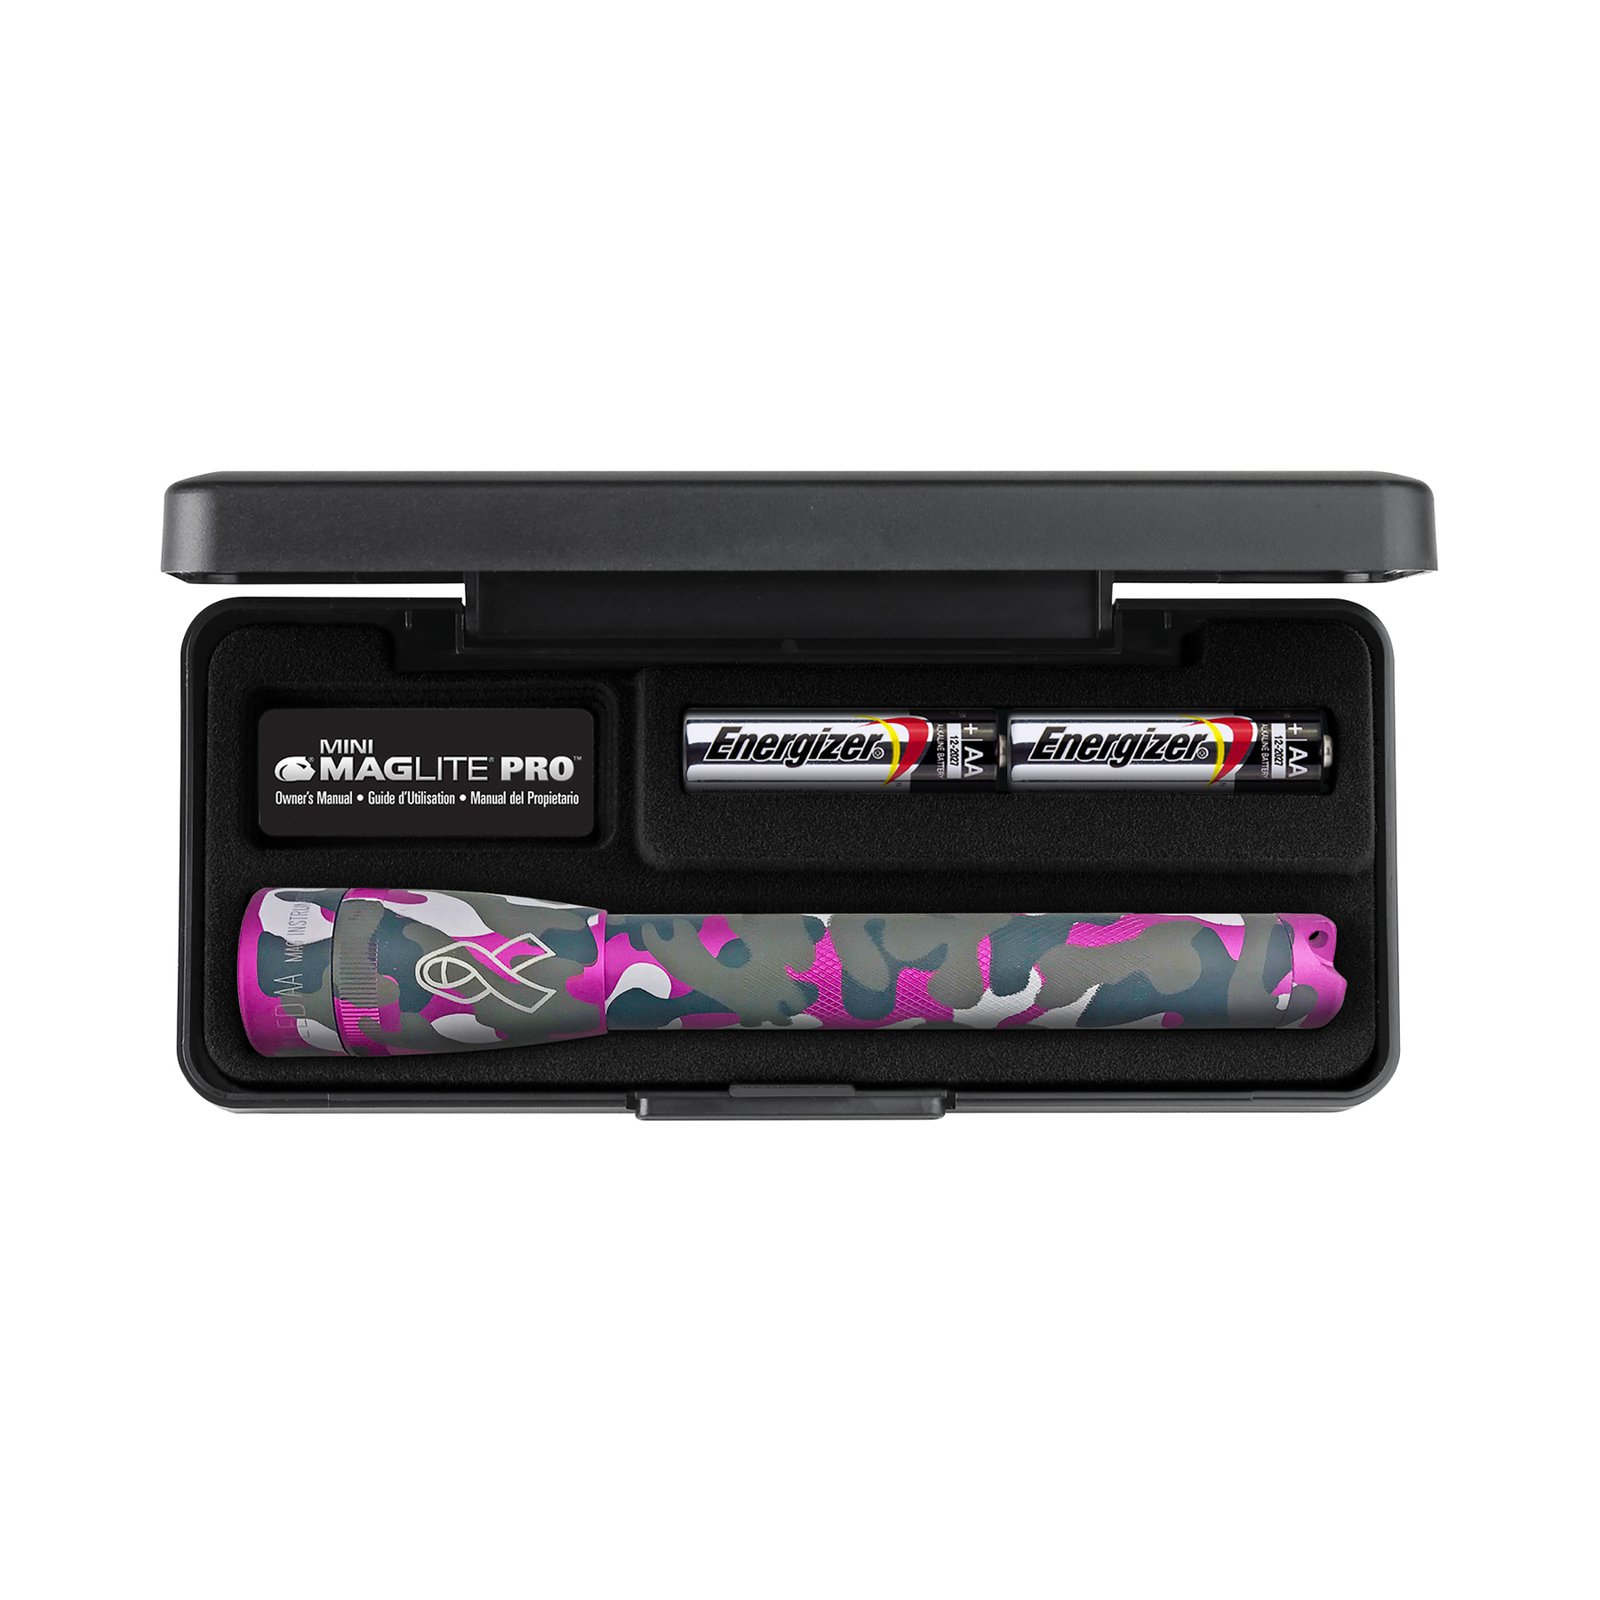 Maglite LED torch Mini Pro, 2xAA, NBCF pink camo, Box